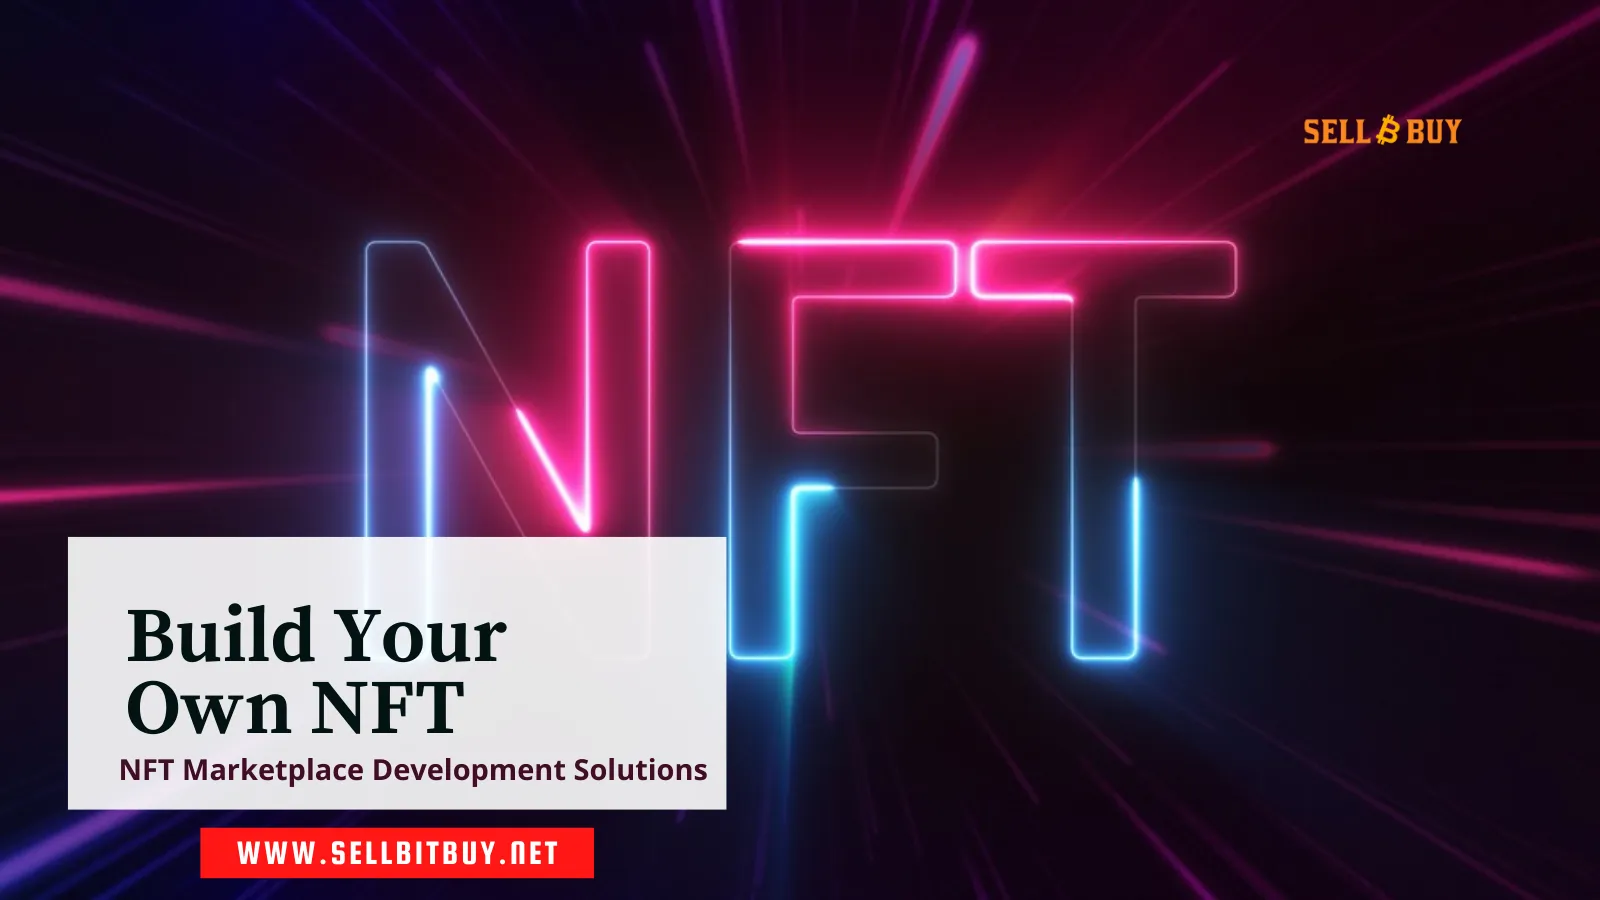 NFT MarketPlace Development Services - Sellbitbuy